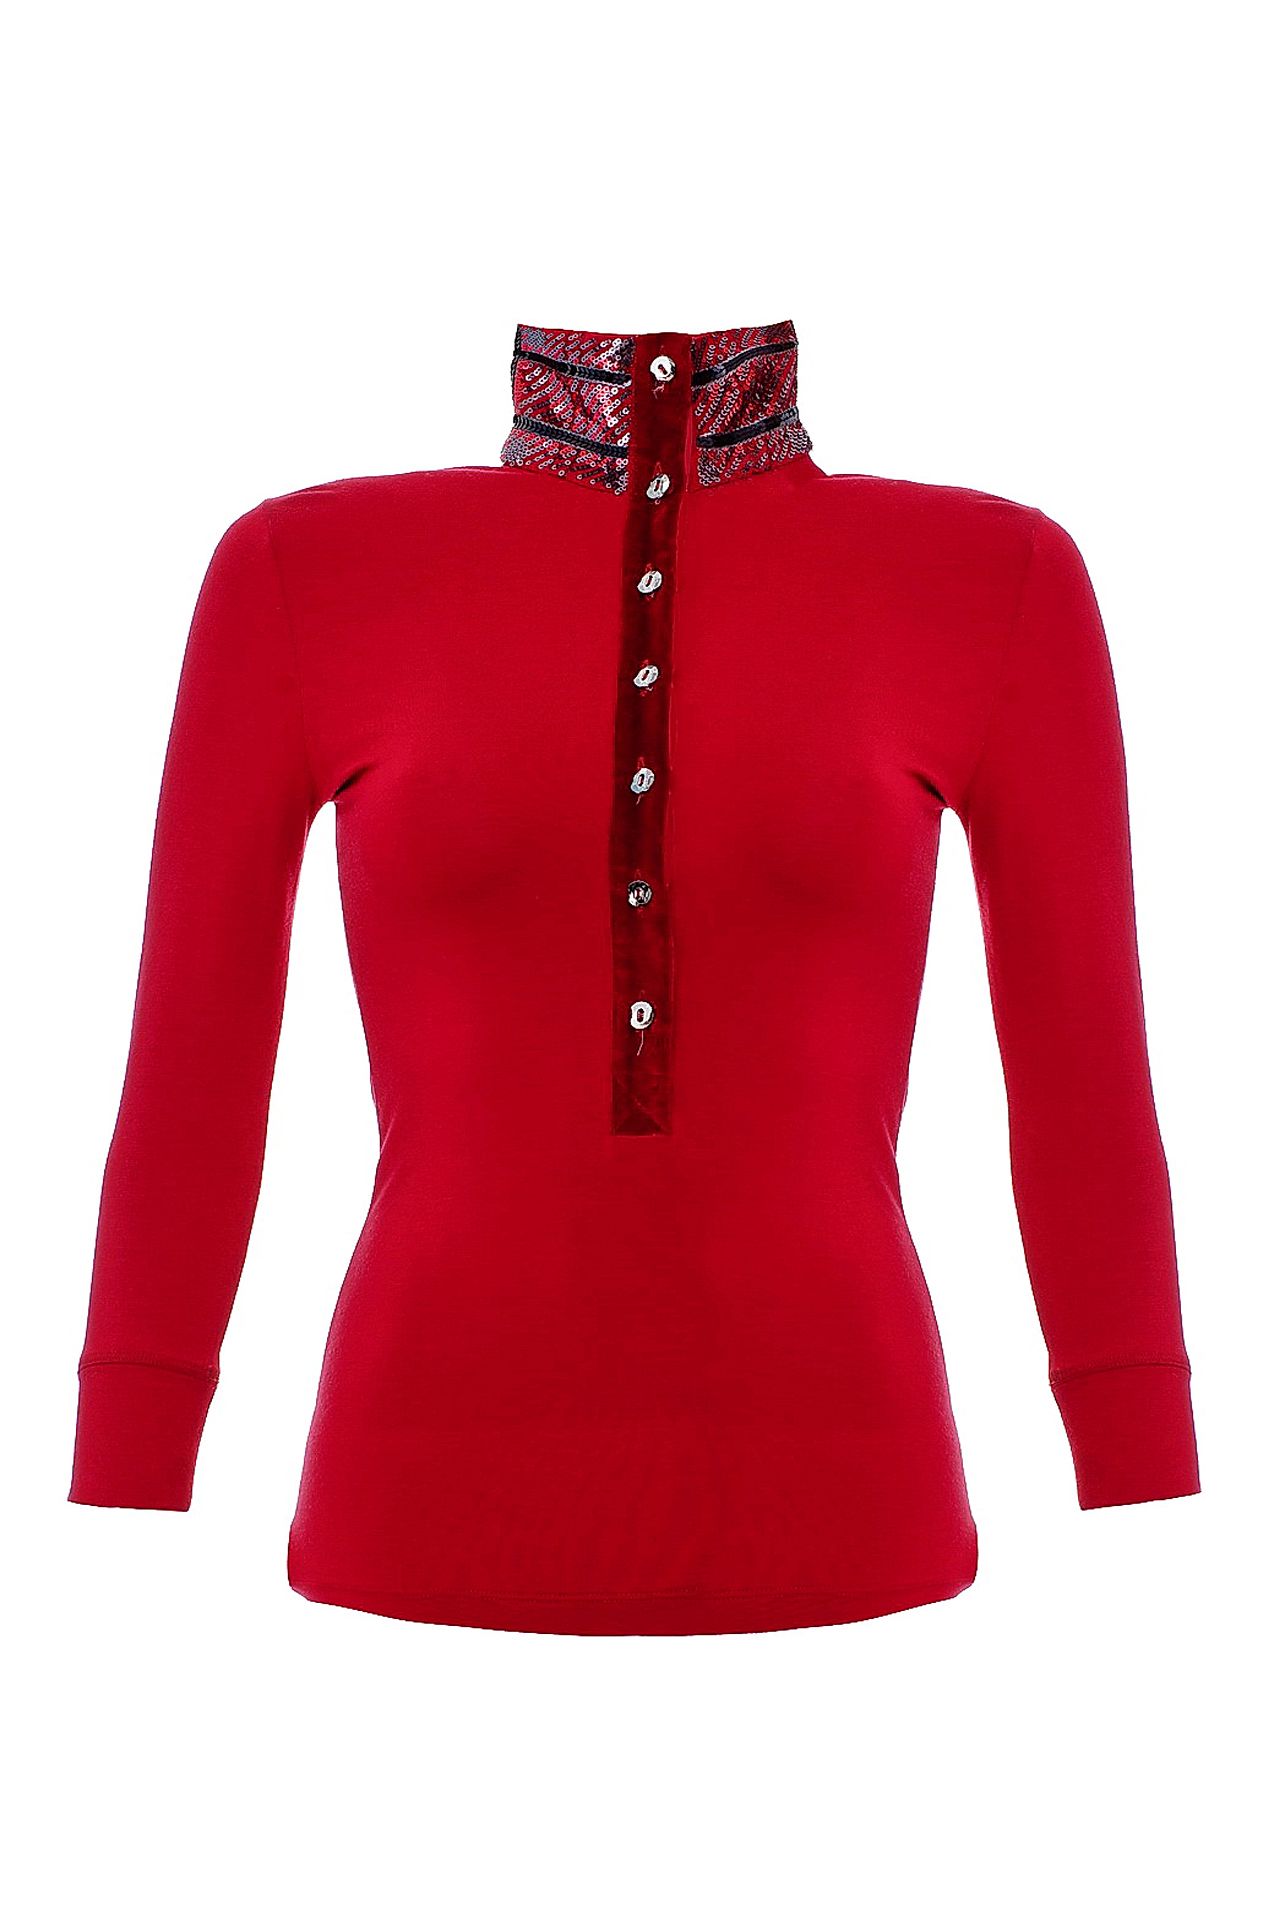 Одежда женская Поло VDP VIA DELLE PERLE (5482/19). Купить за 6100 руб.